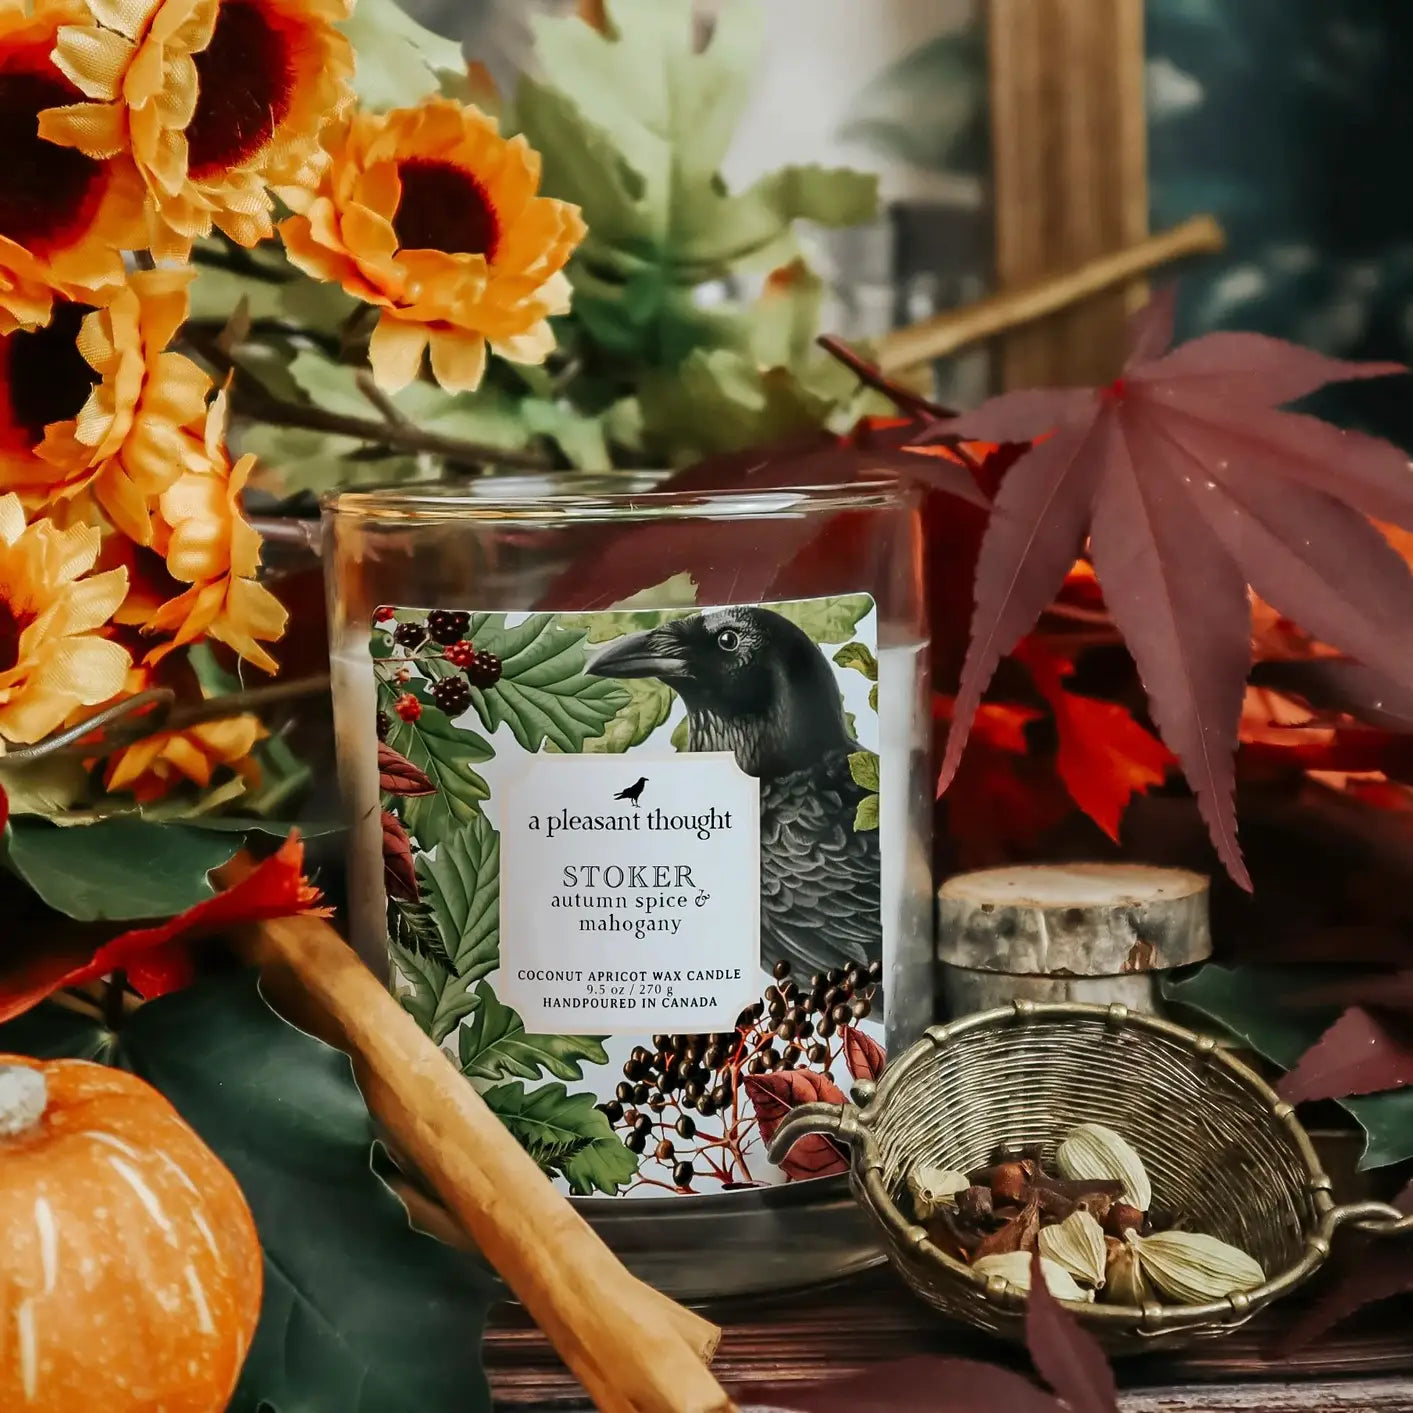 Stoker-Autumn Spice & Mahogany 15 oz. Candle